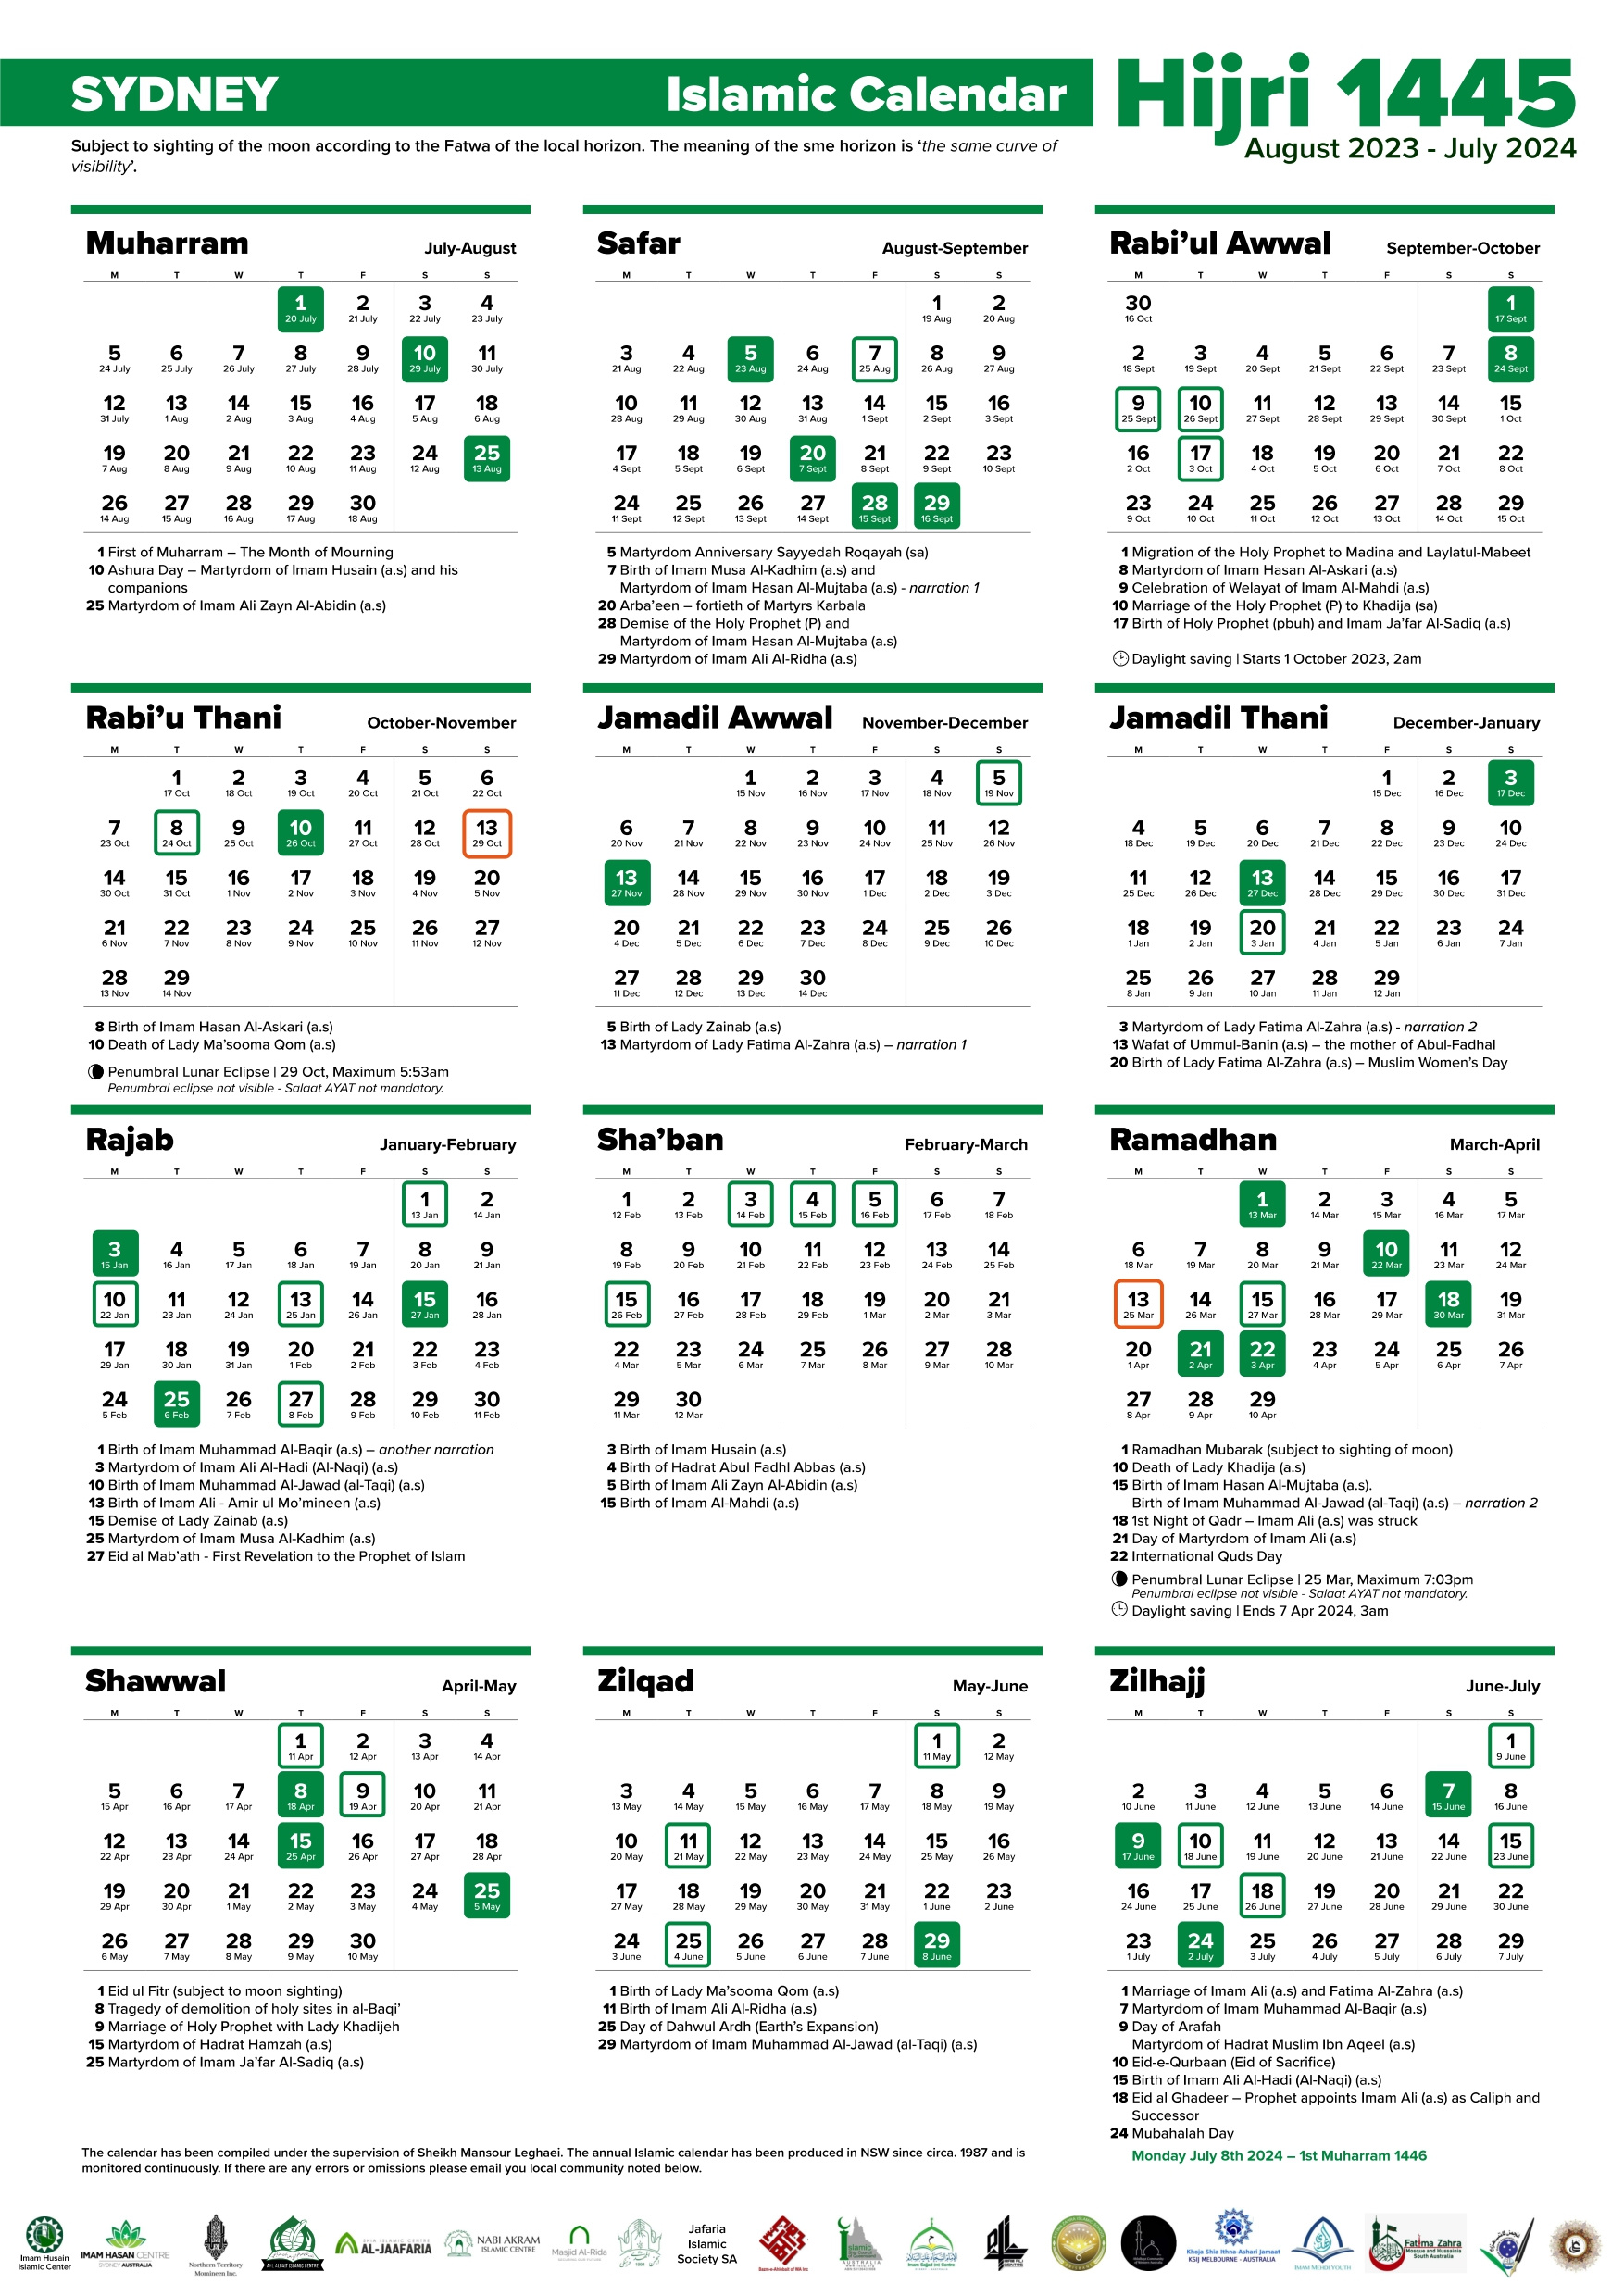 Annual Islamic Calendar 1445 Ah / 2023-2024 Ad – Imam Husain for 19 July 2024 in Islamic Calendar